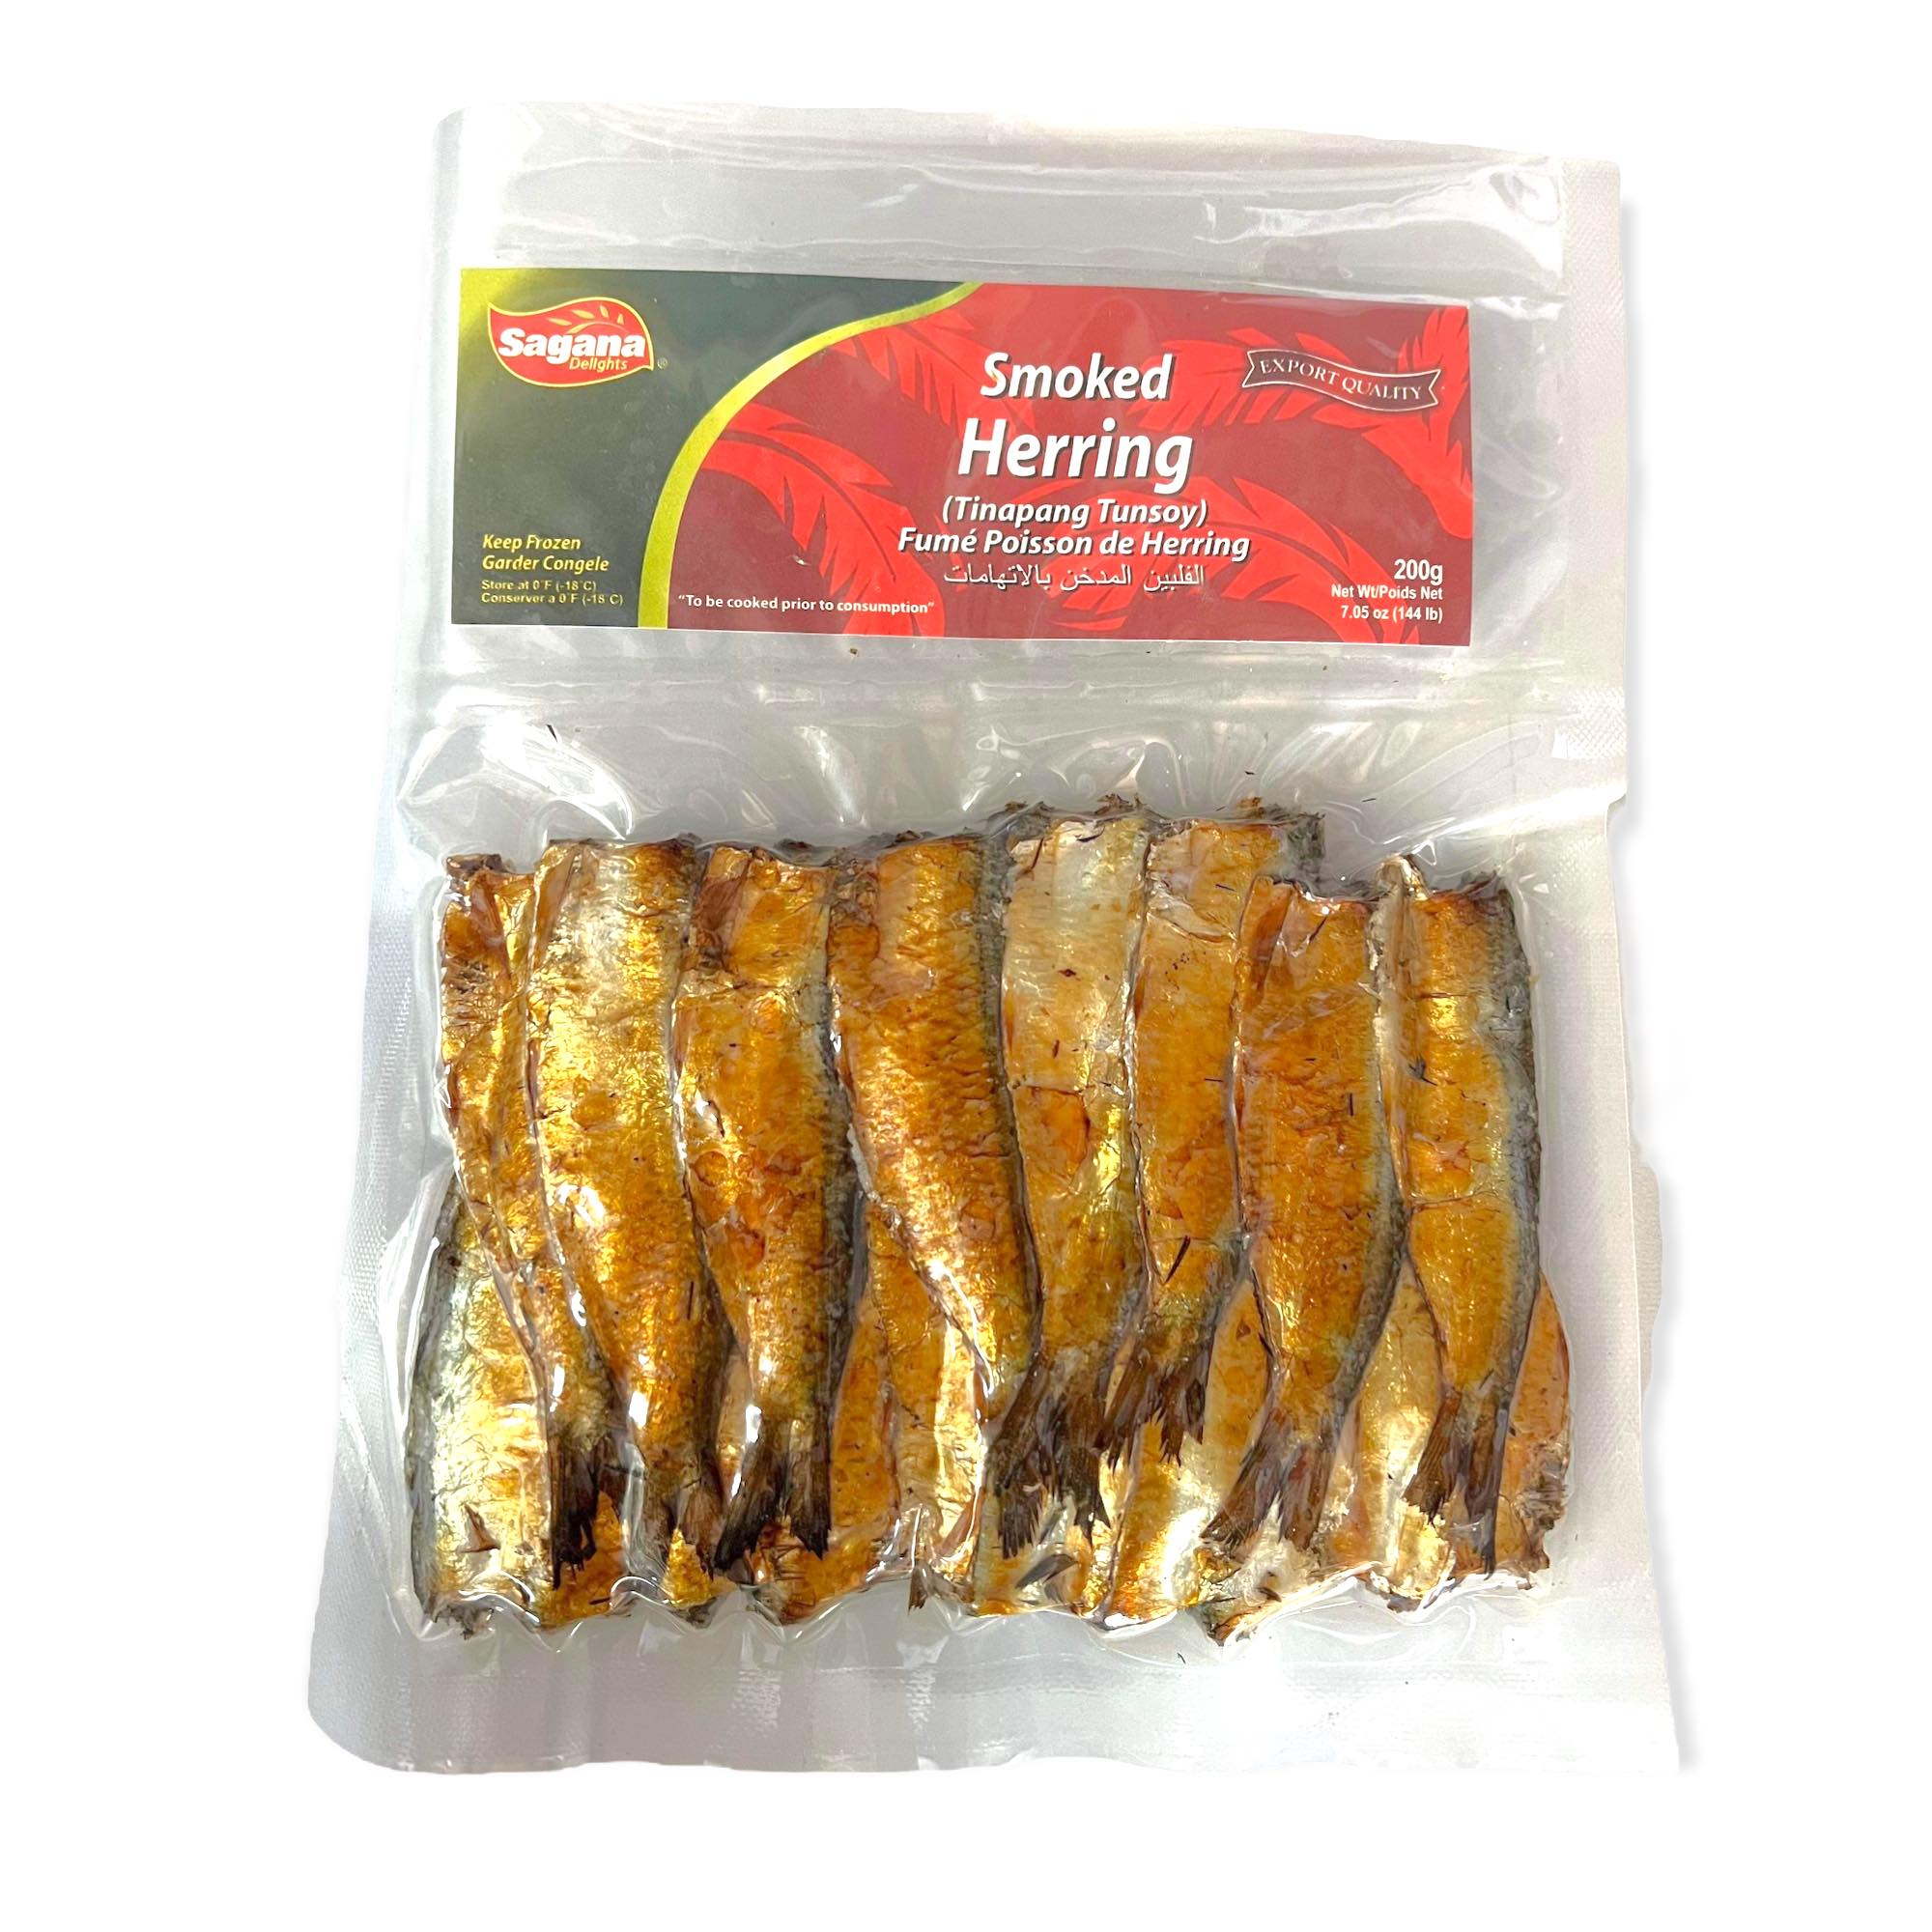 Sagana - Smoked Philippine Herring (Tinapang Tunsoy) - 200 G